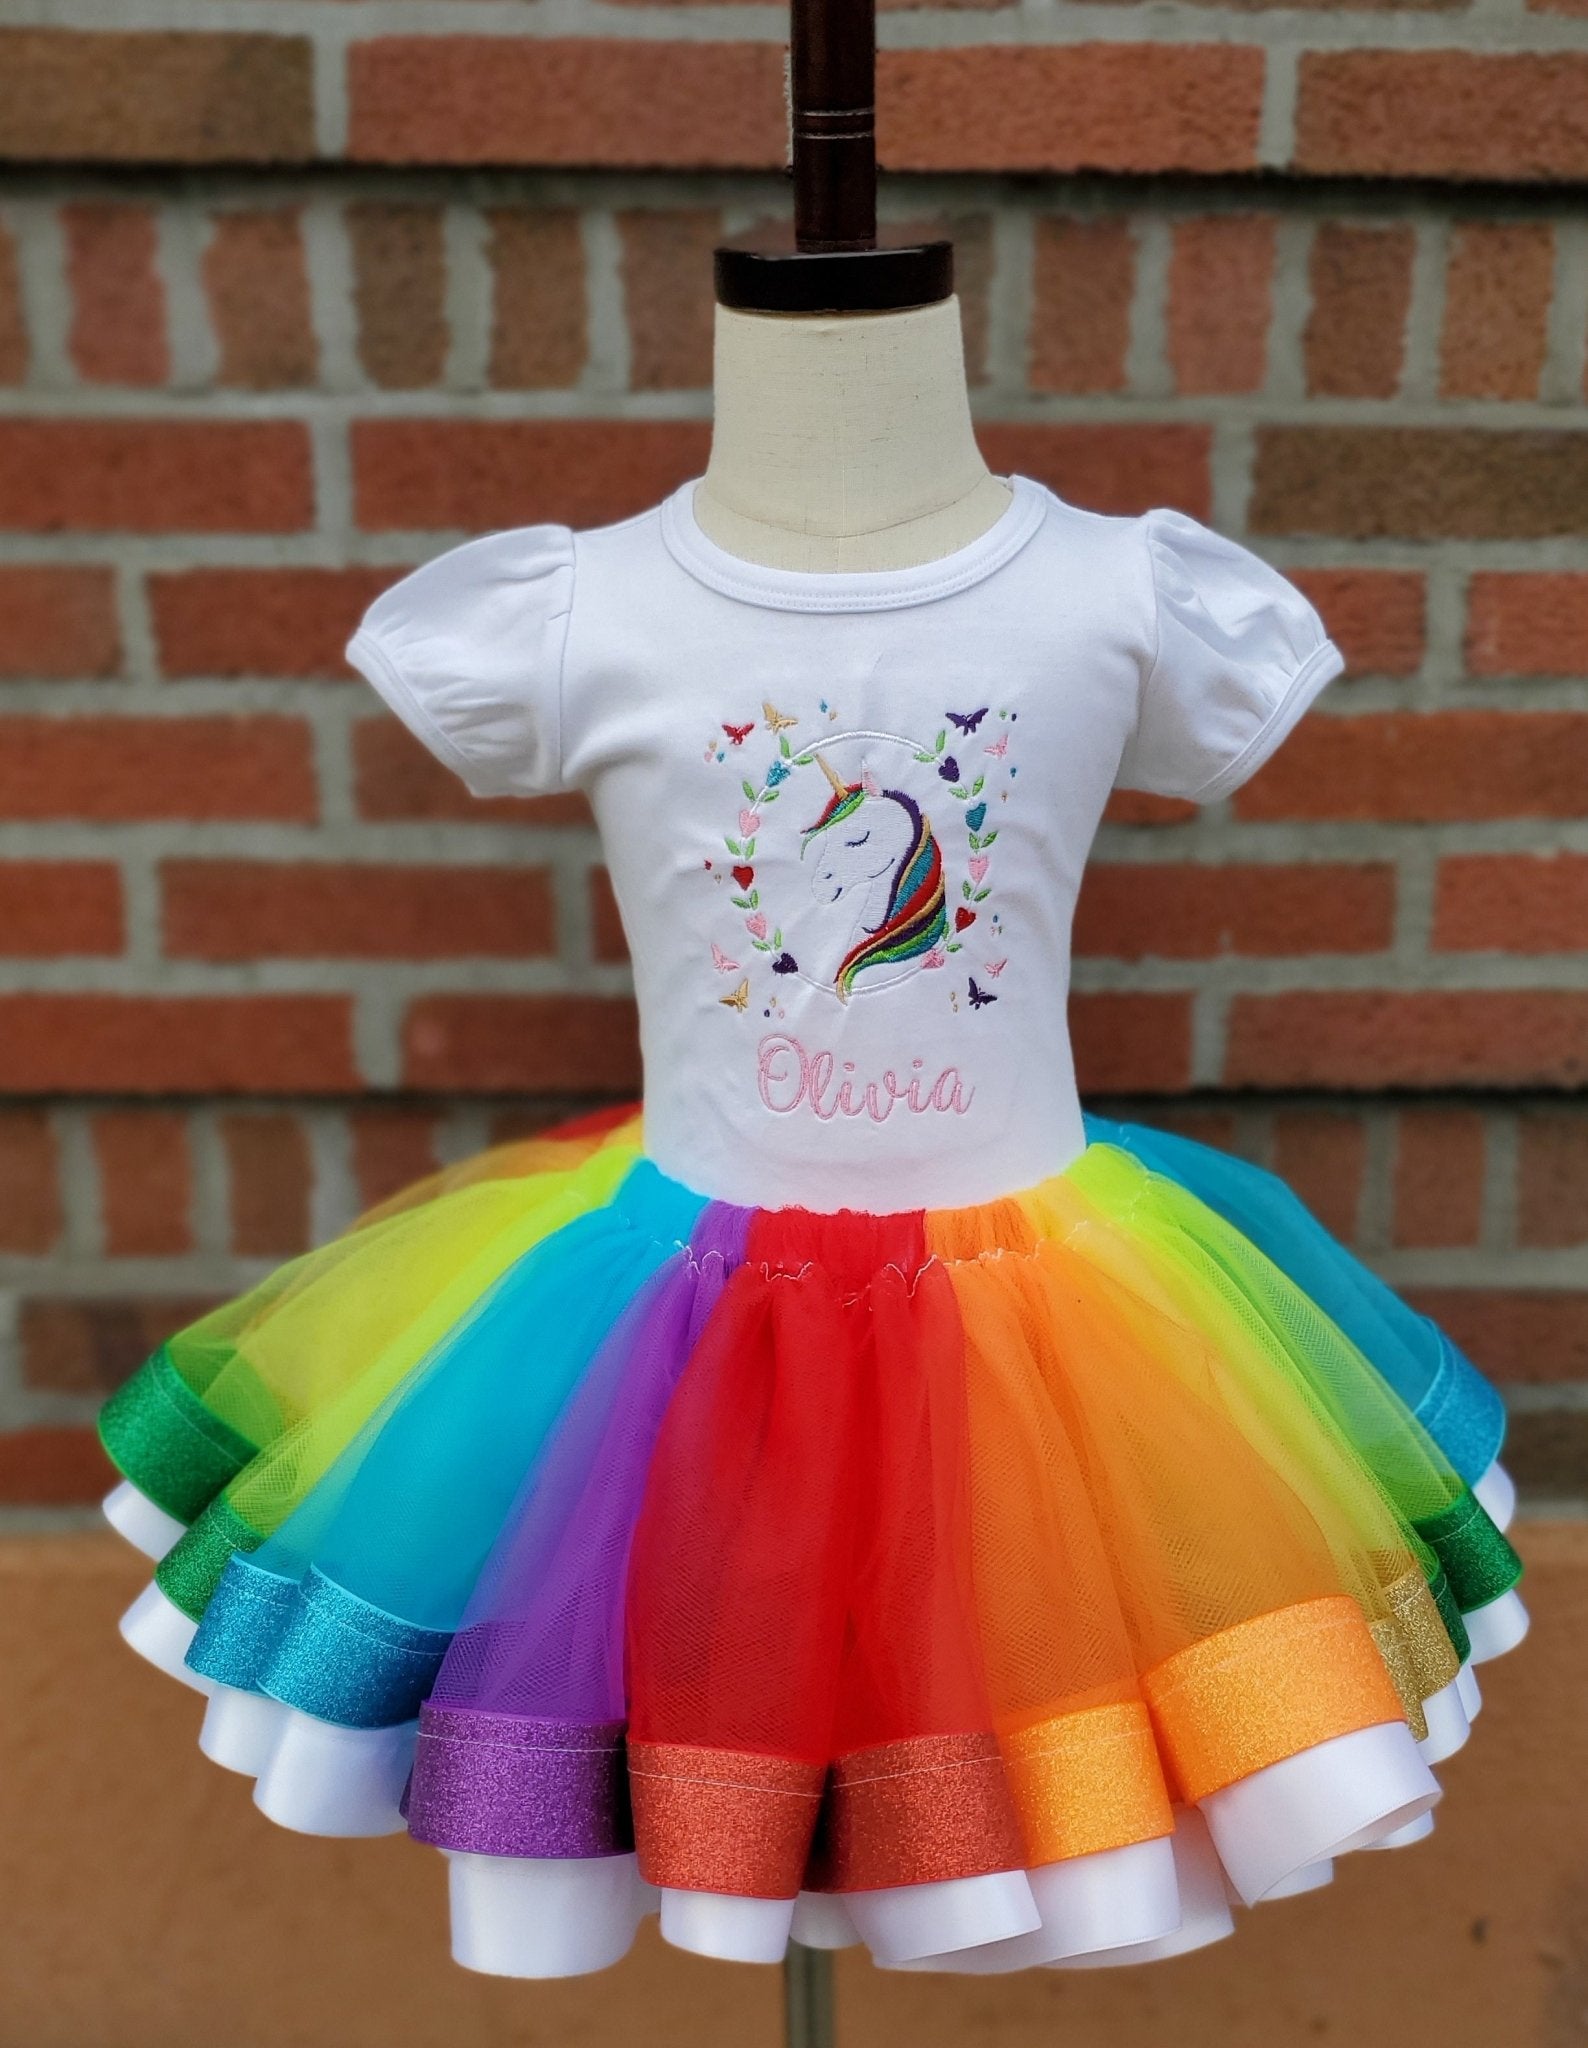 Rainbow Unicorn Tutu Outfit - numonet